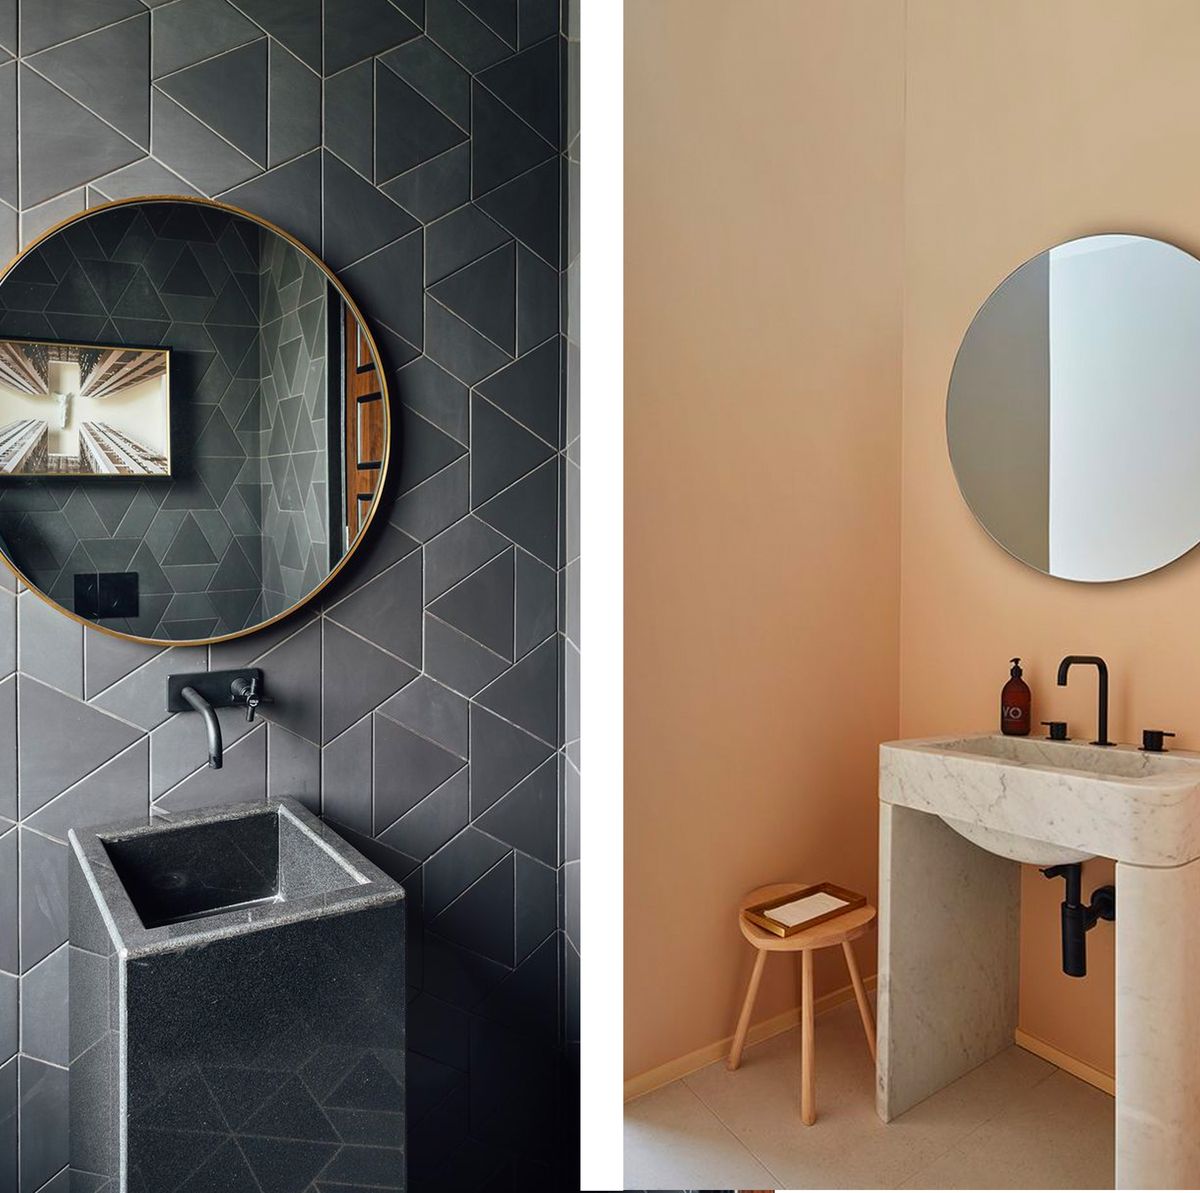 Ideas decoración para baños modernos con espejos redondos